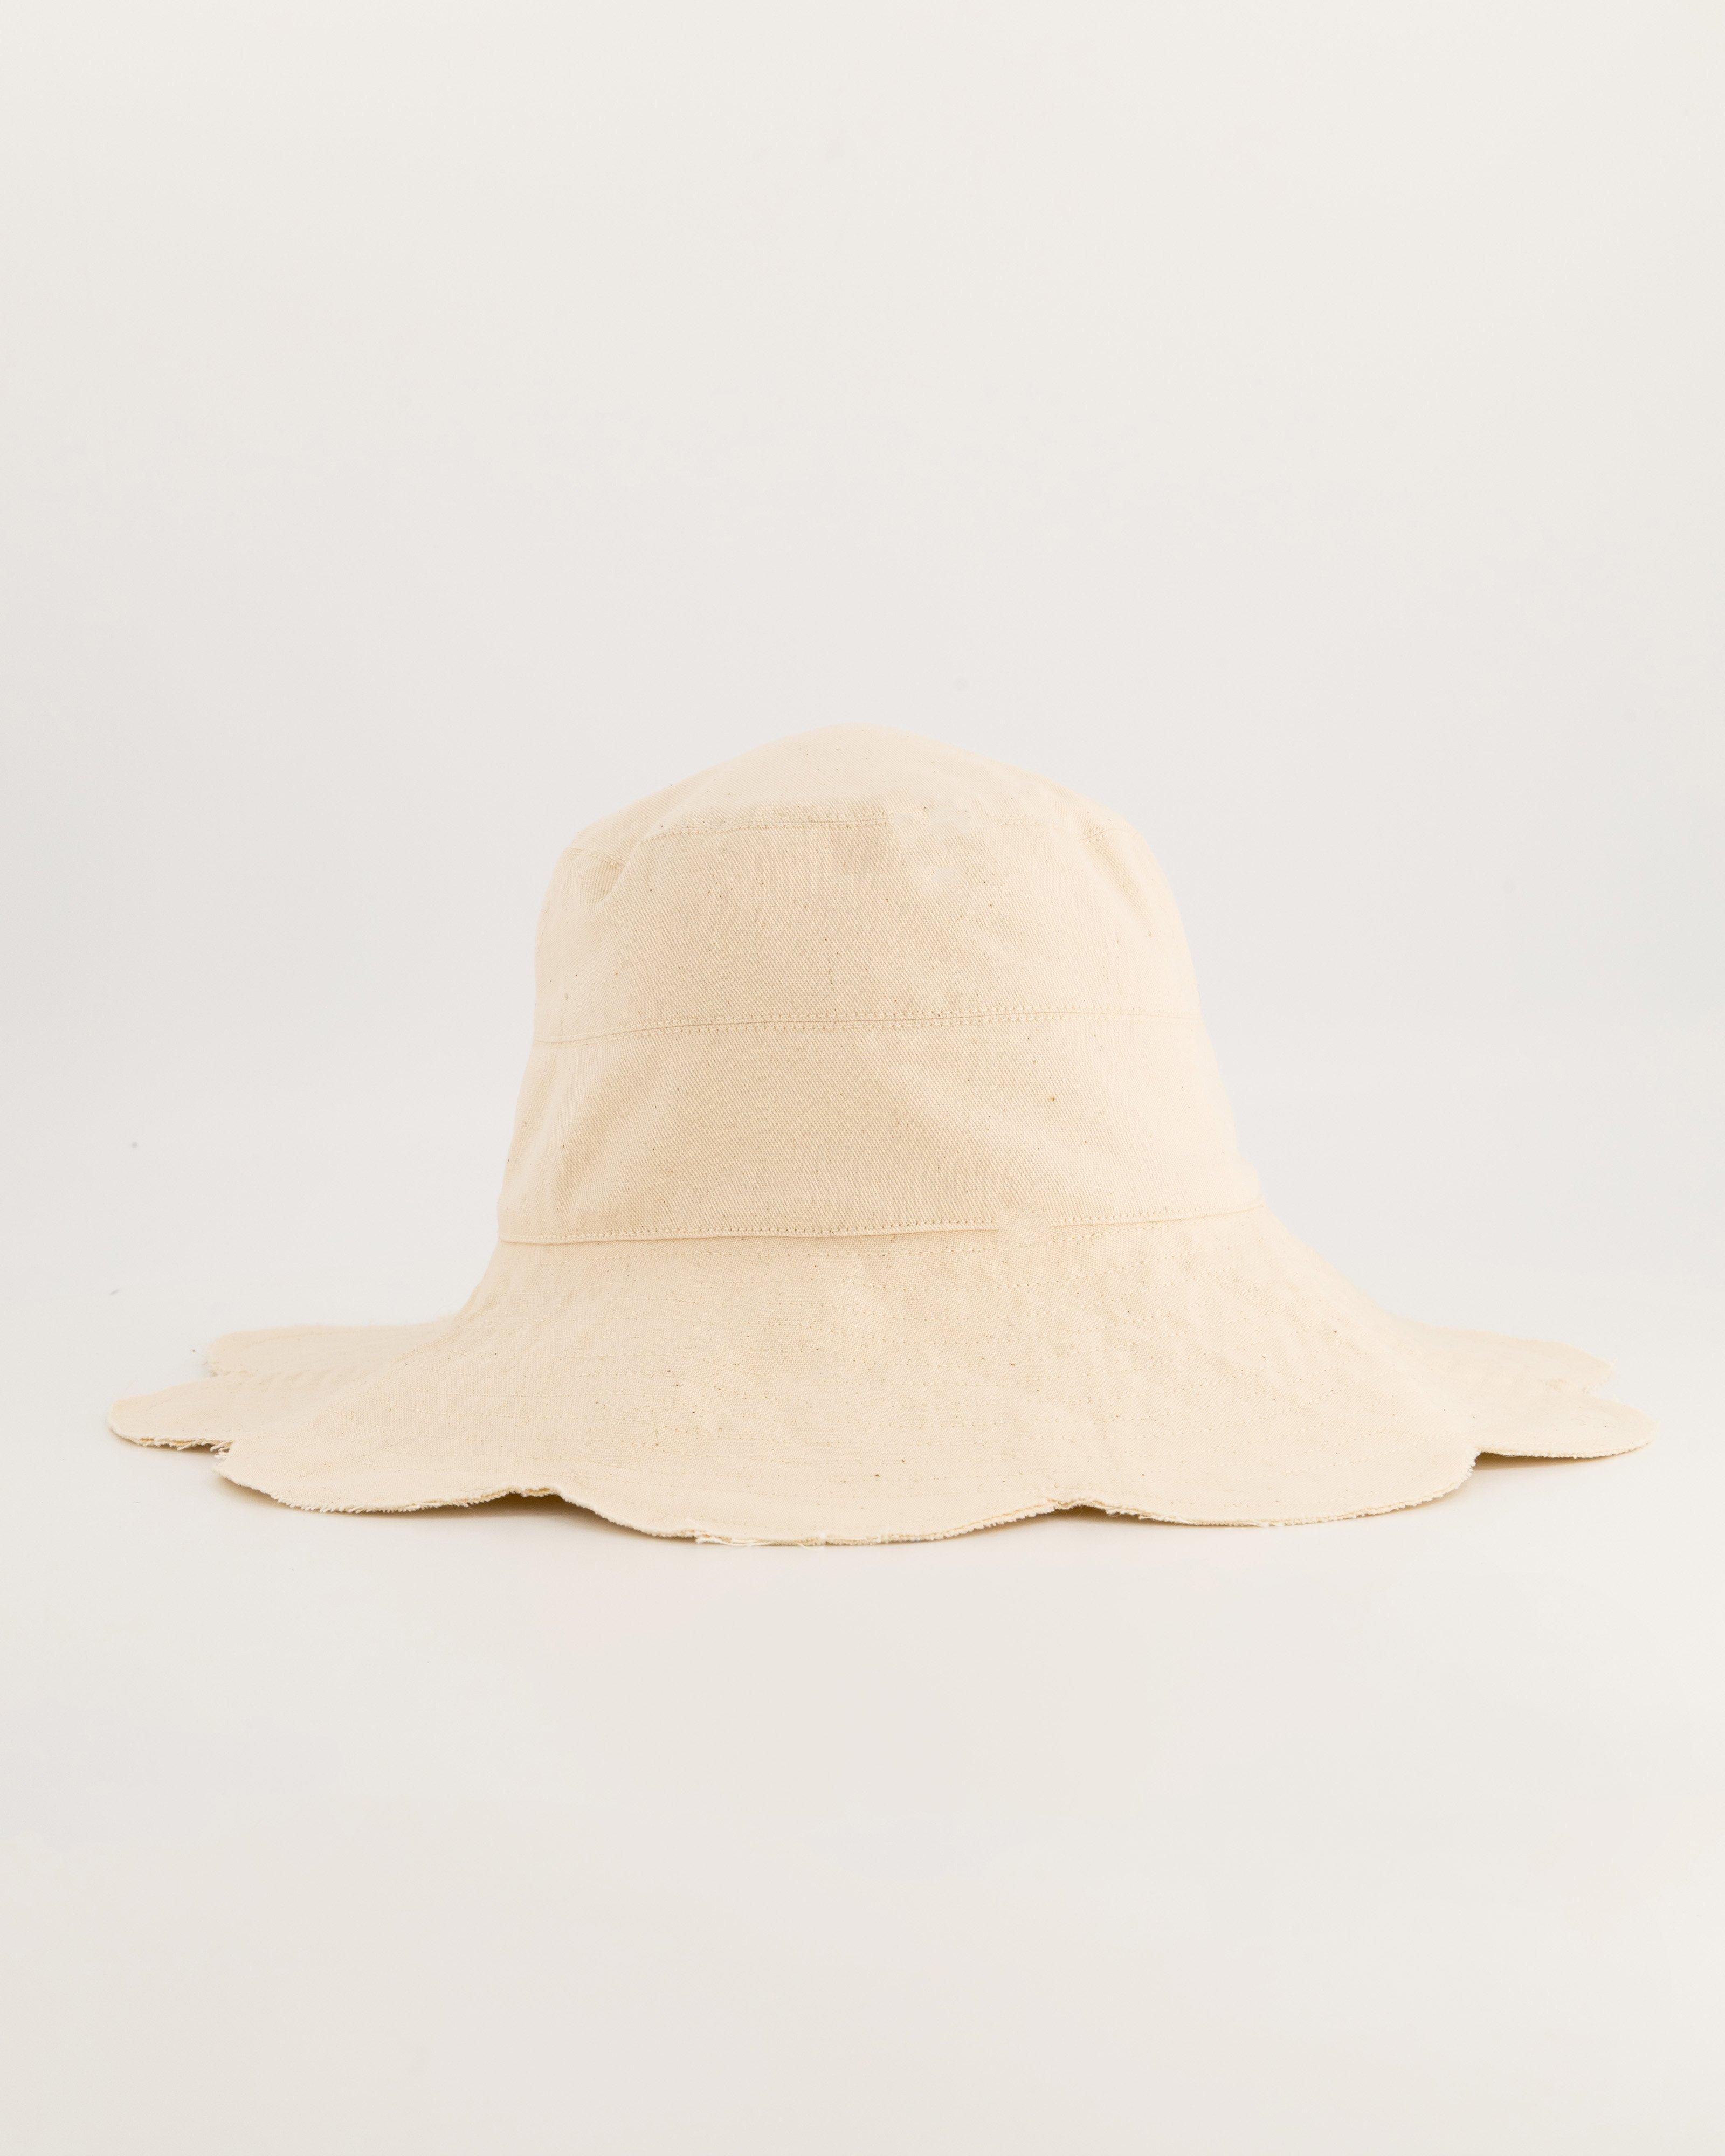 Teena Scallop Bucket Hat - Poetry Clothing Store